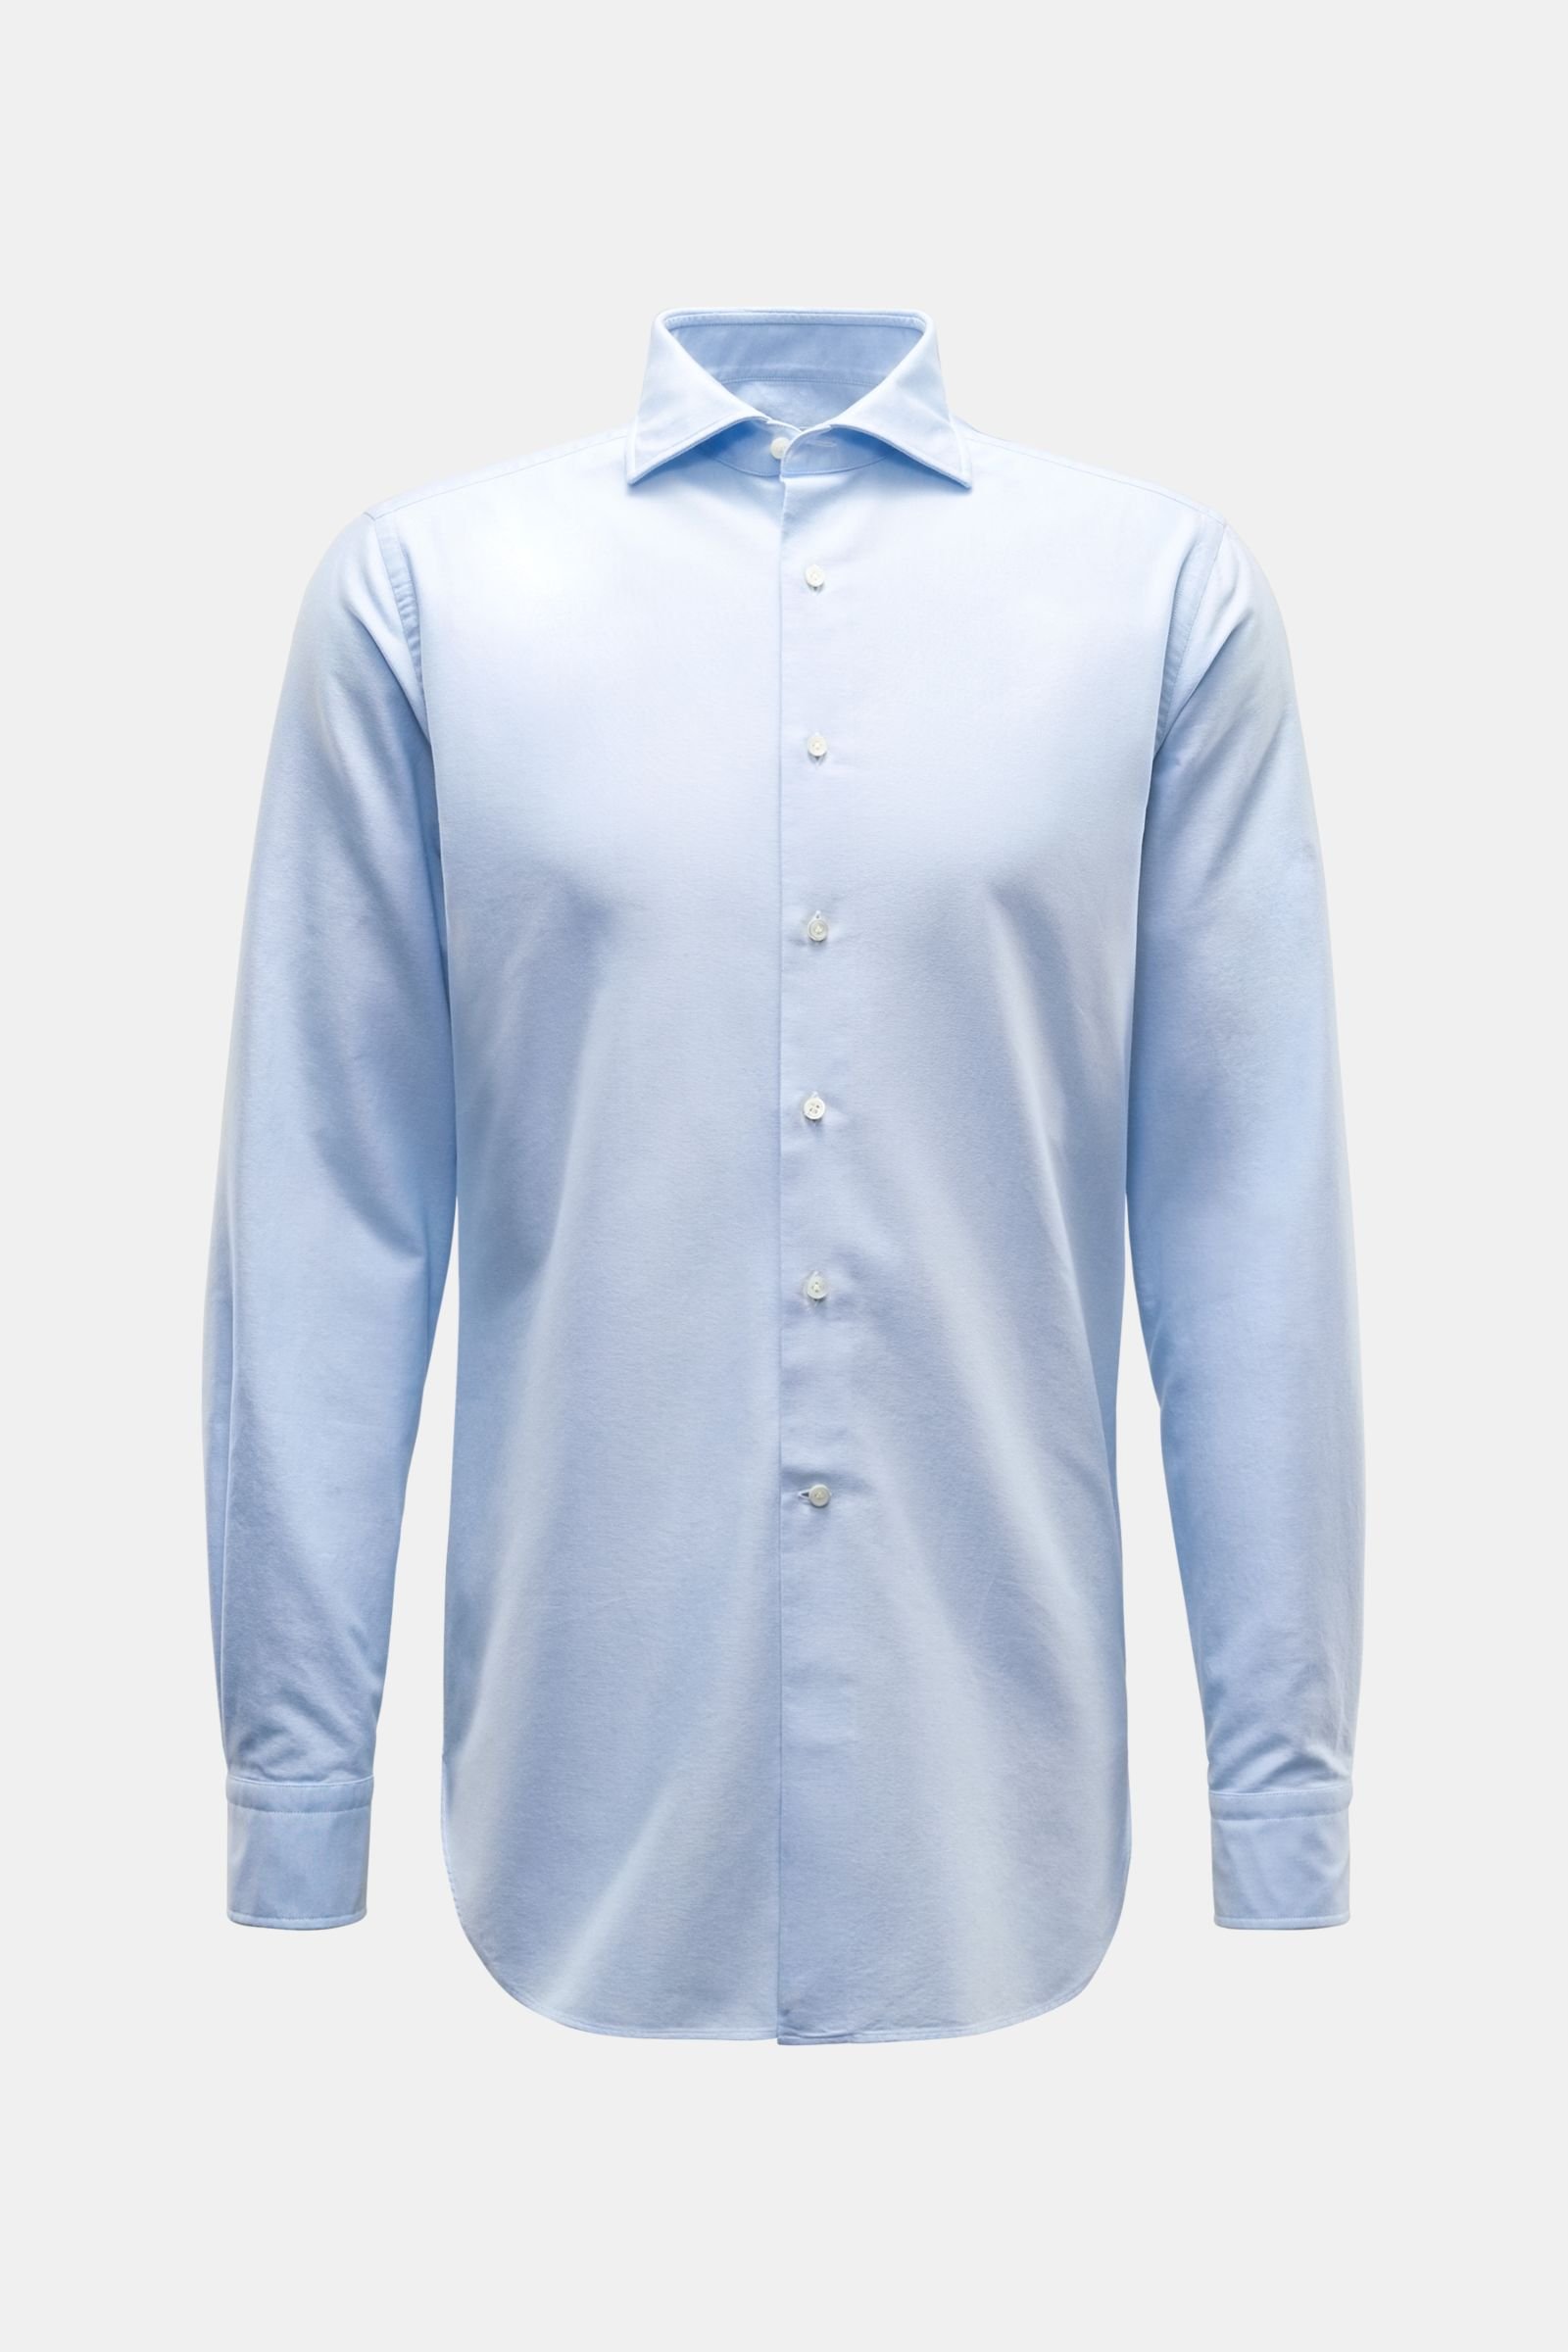 Oxford shirt shark collar pastel blue